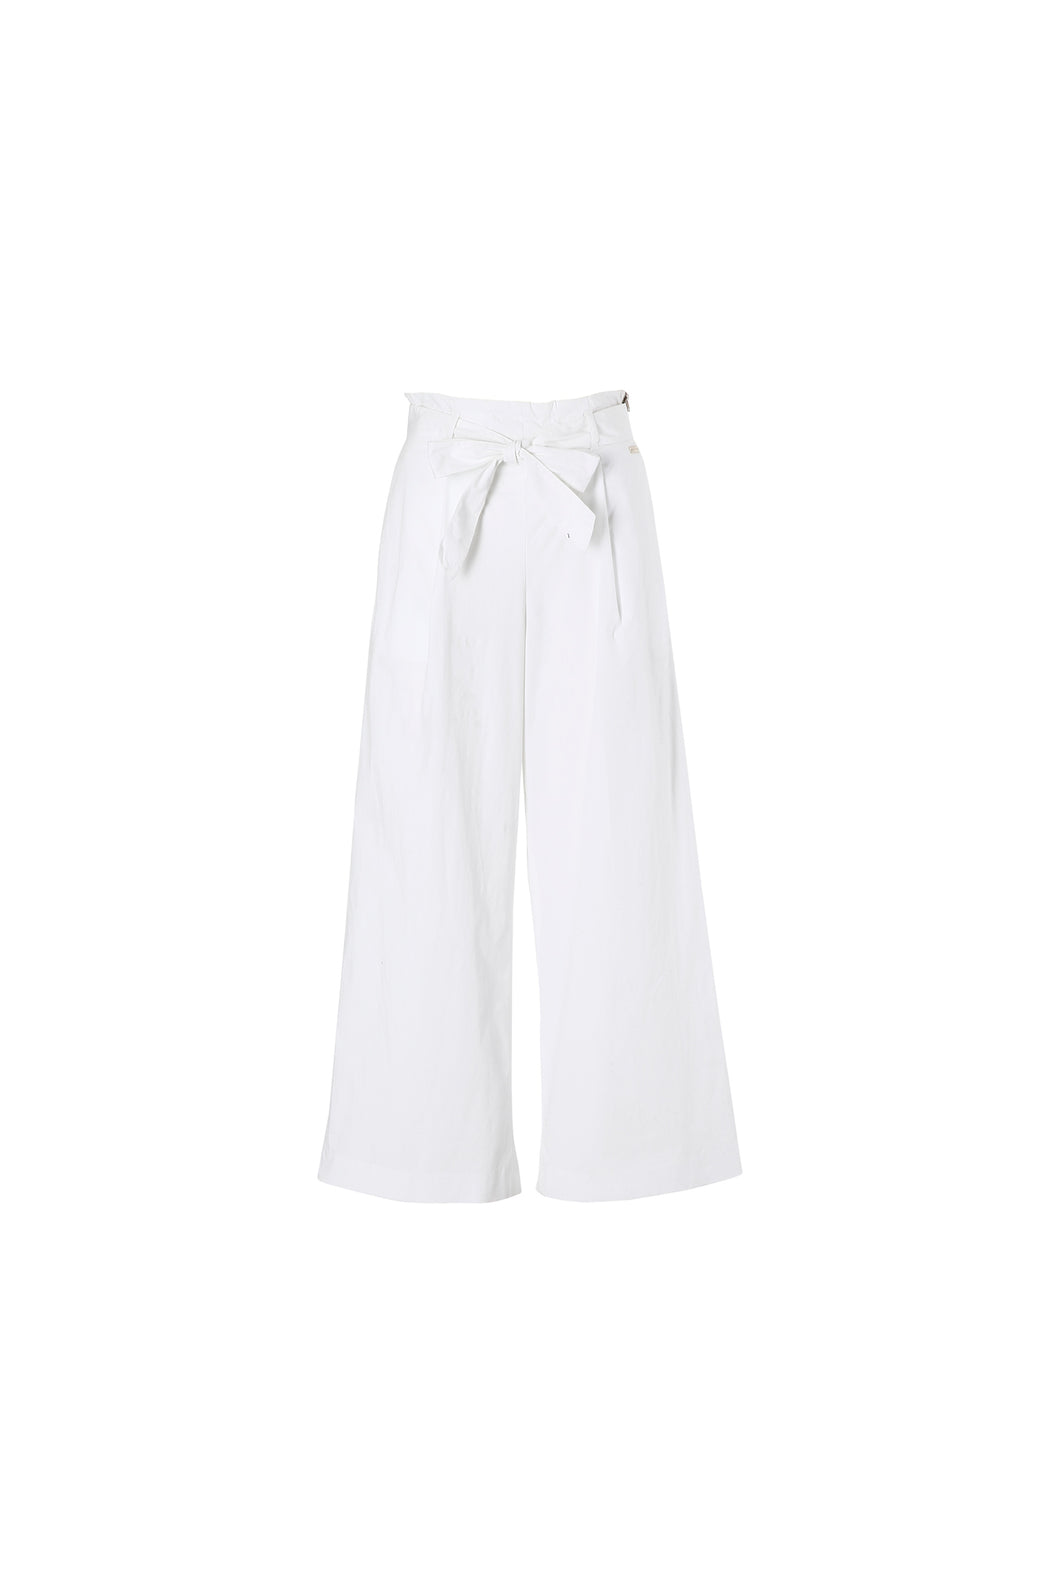 Pantaloni Donna colore Bianco